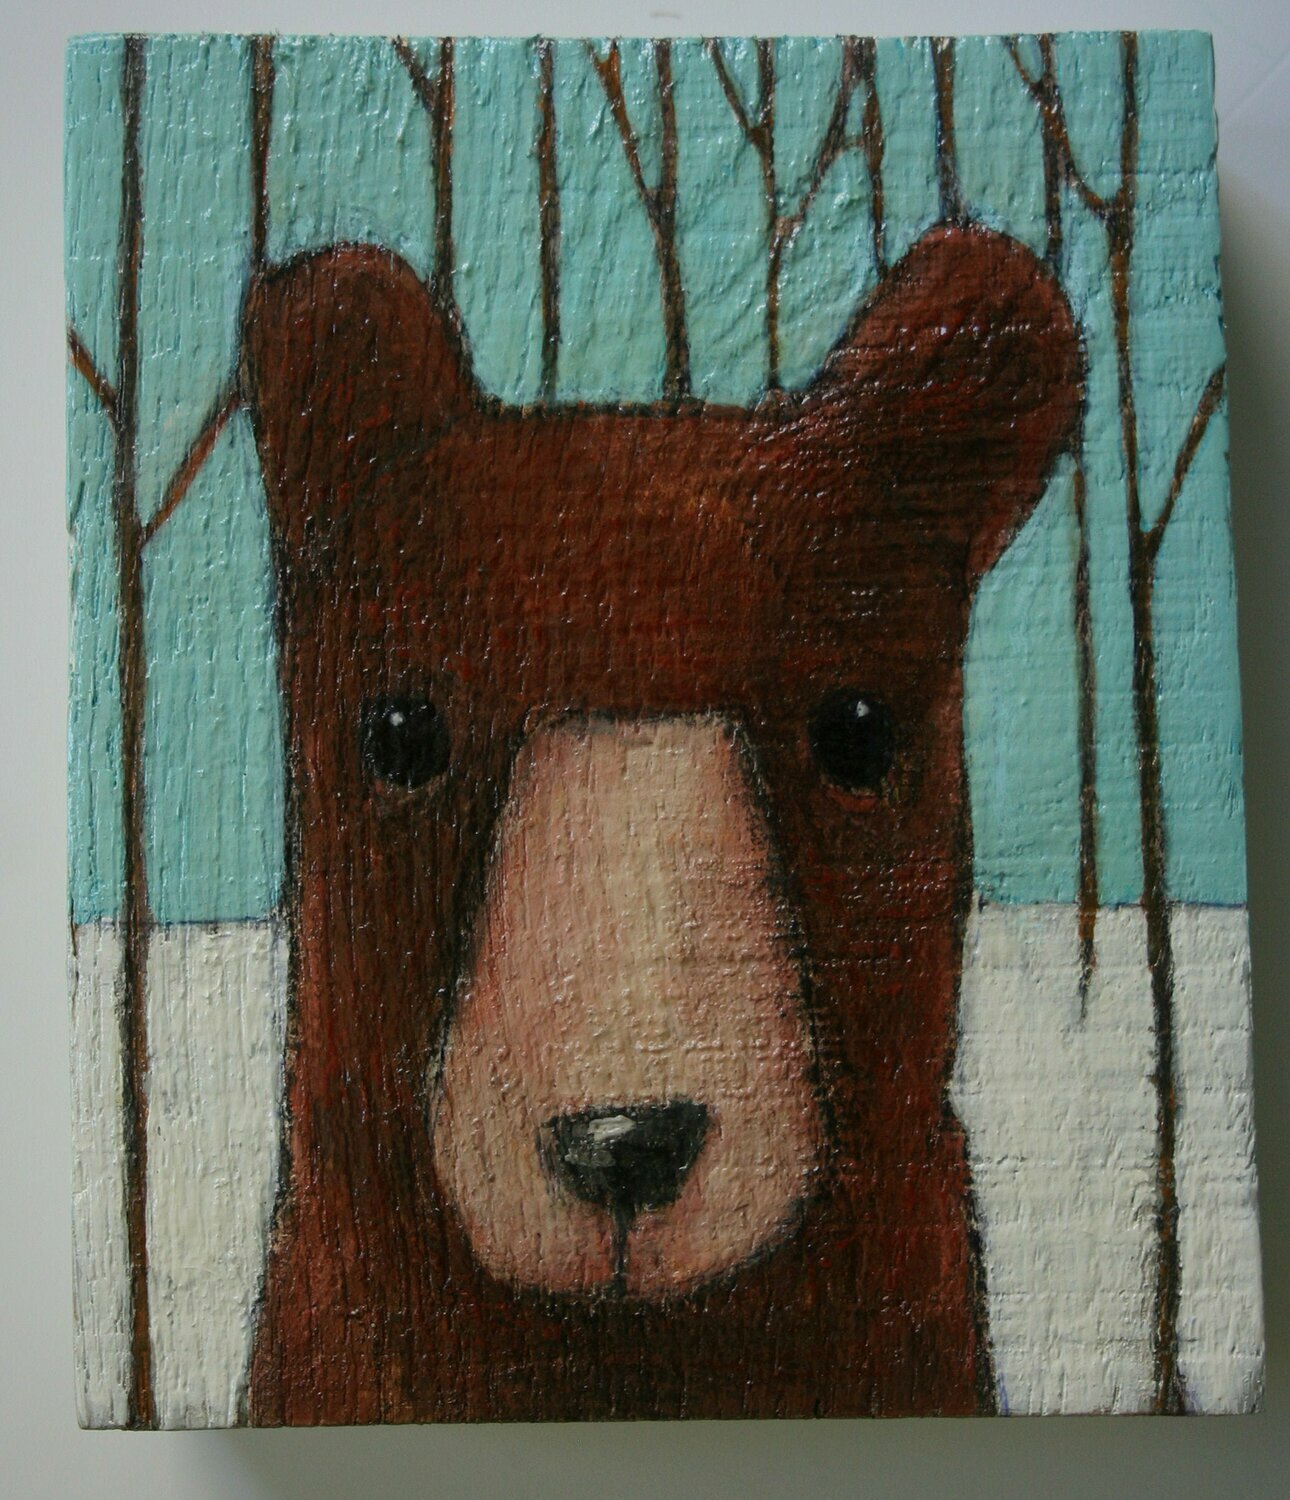 bear in snowy forest painting original a2n2koon wall art on reclaimed wood block brown bear winter trees woods whimsical bear artwork kids